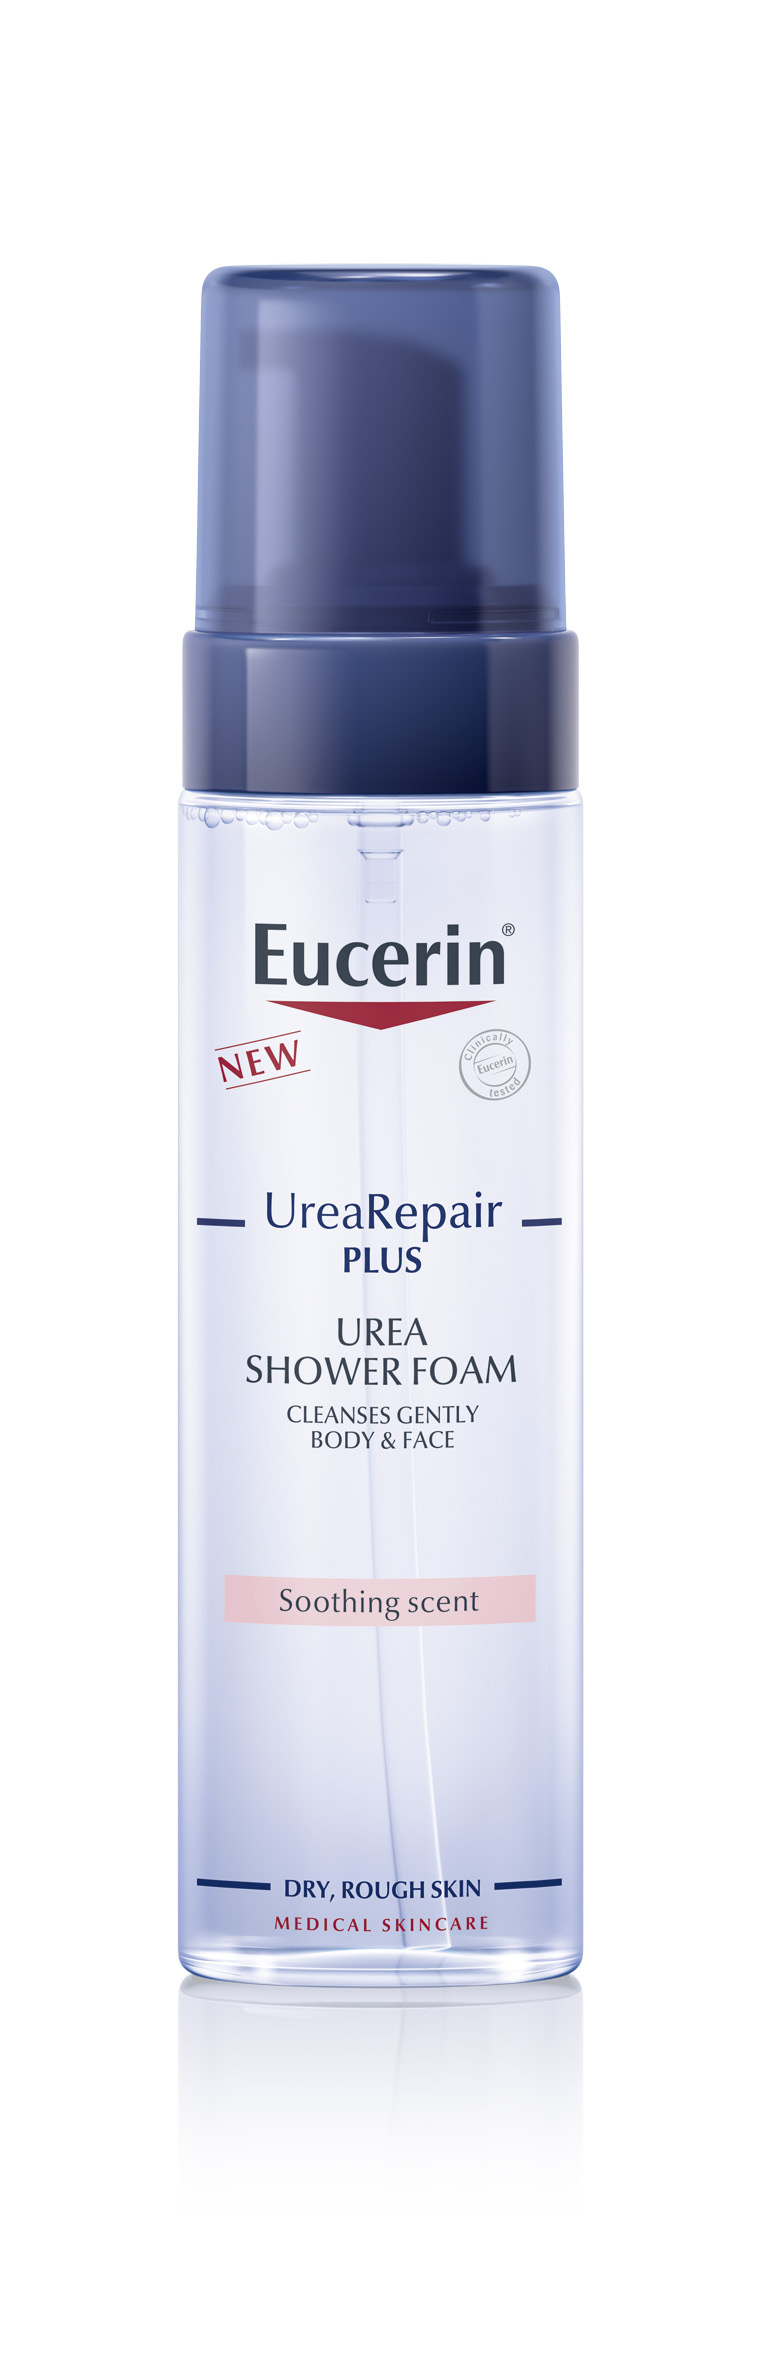 Eucerin Urea Repair PLUS Duschschaum (200 ml)